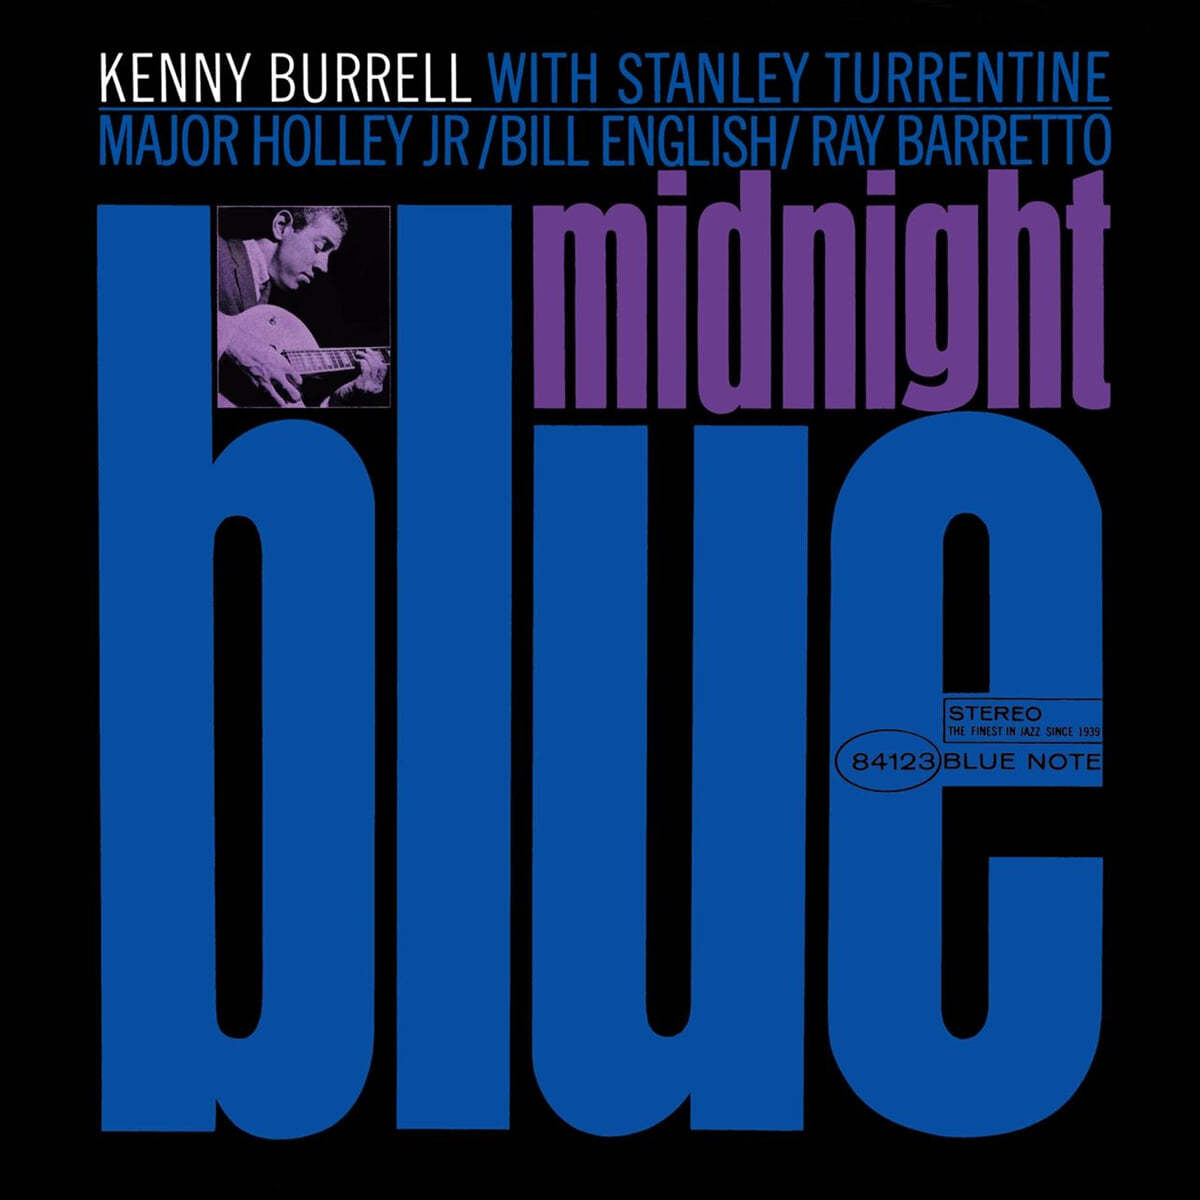 Kenny Burrell (케니 버렐) - Midnight Blue 